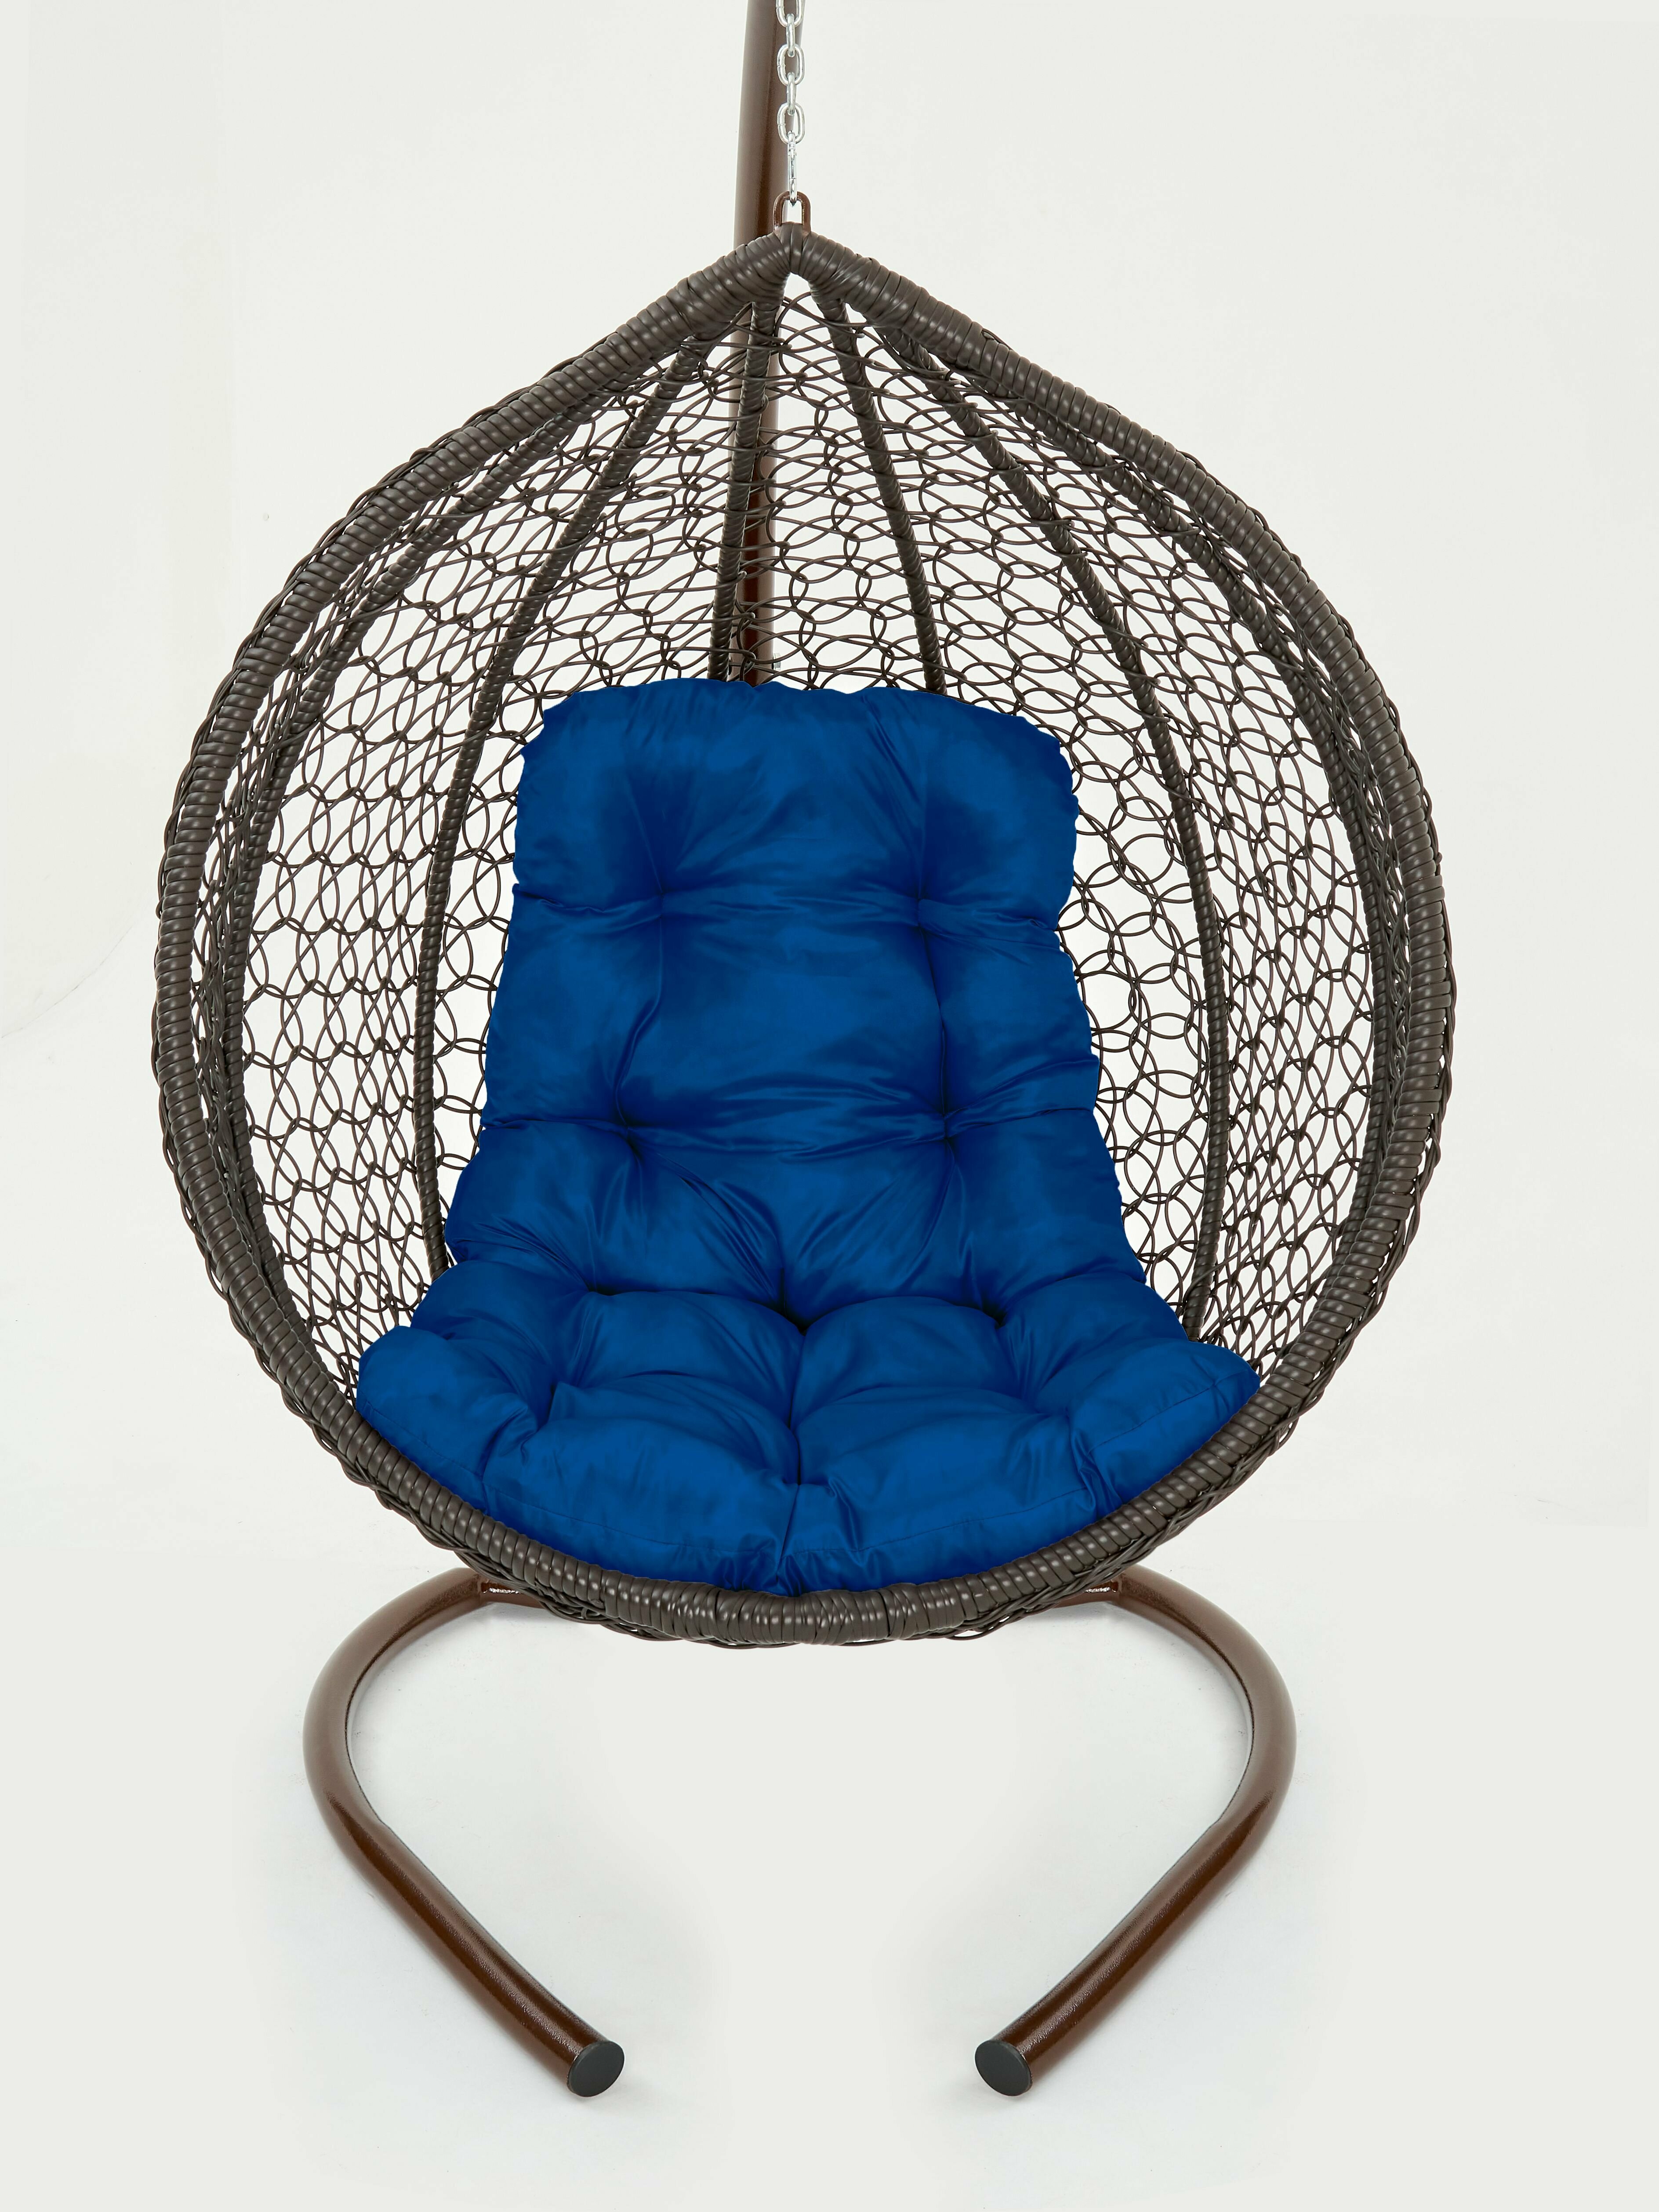 Подвесное кресло кокон садовое Barberries Yova Bubble Plus. Стойка венге до 125 кг, подушка трапеция синяя - фотография № 3